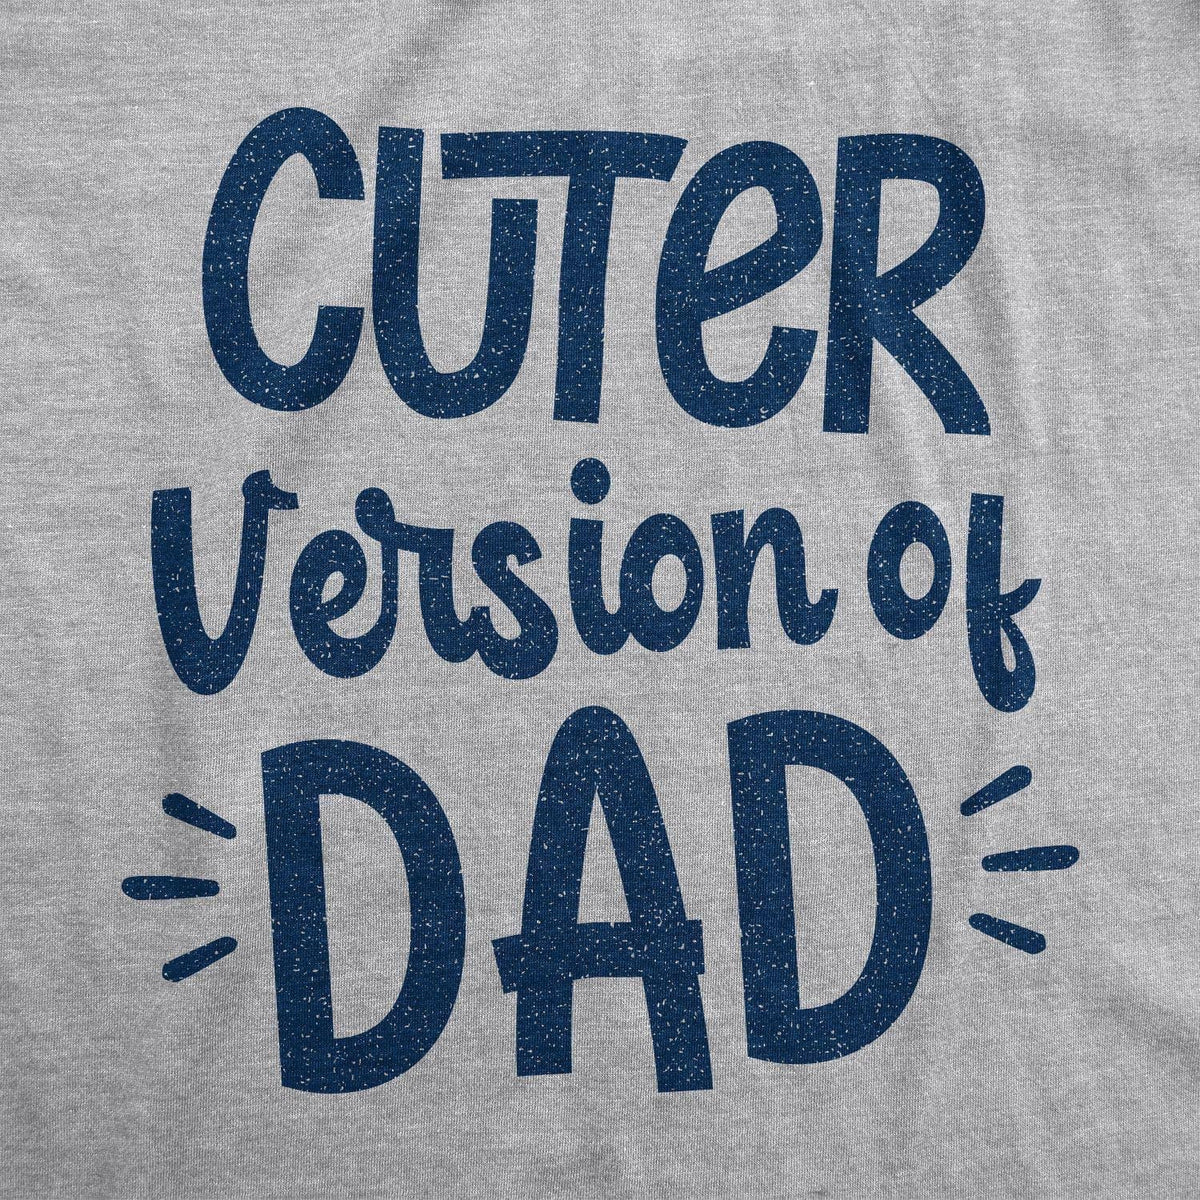 Cuter Version Of Dad Baby Bodysuit - Crazy Dog T-Shirts